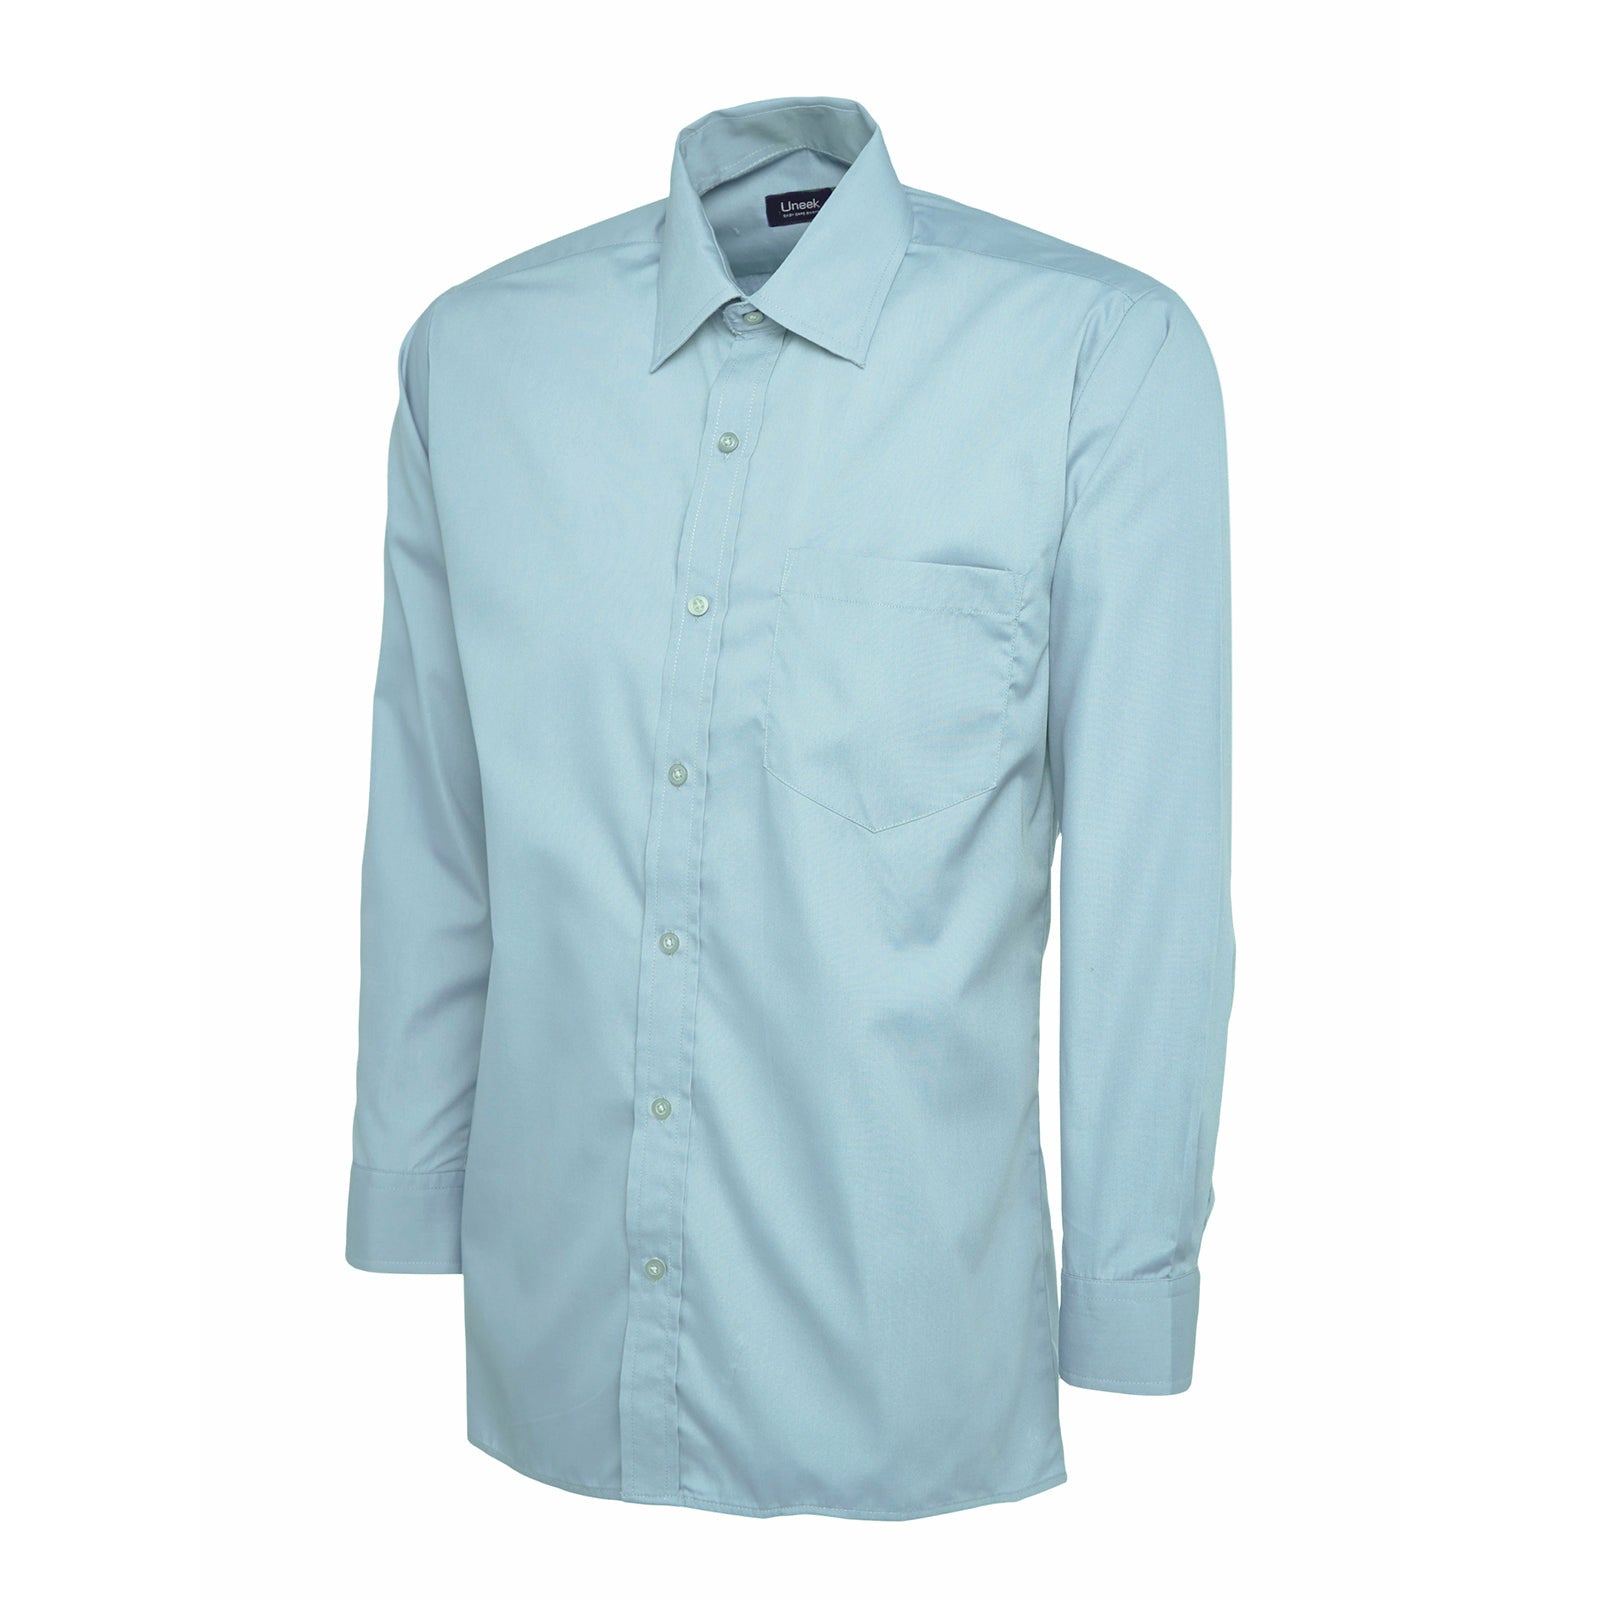 Mens Poplin Full Sleeve Shirt (17 - 19.5) - Light Blue